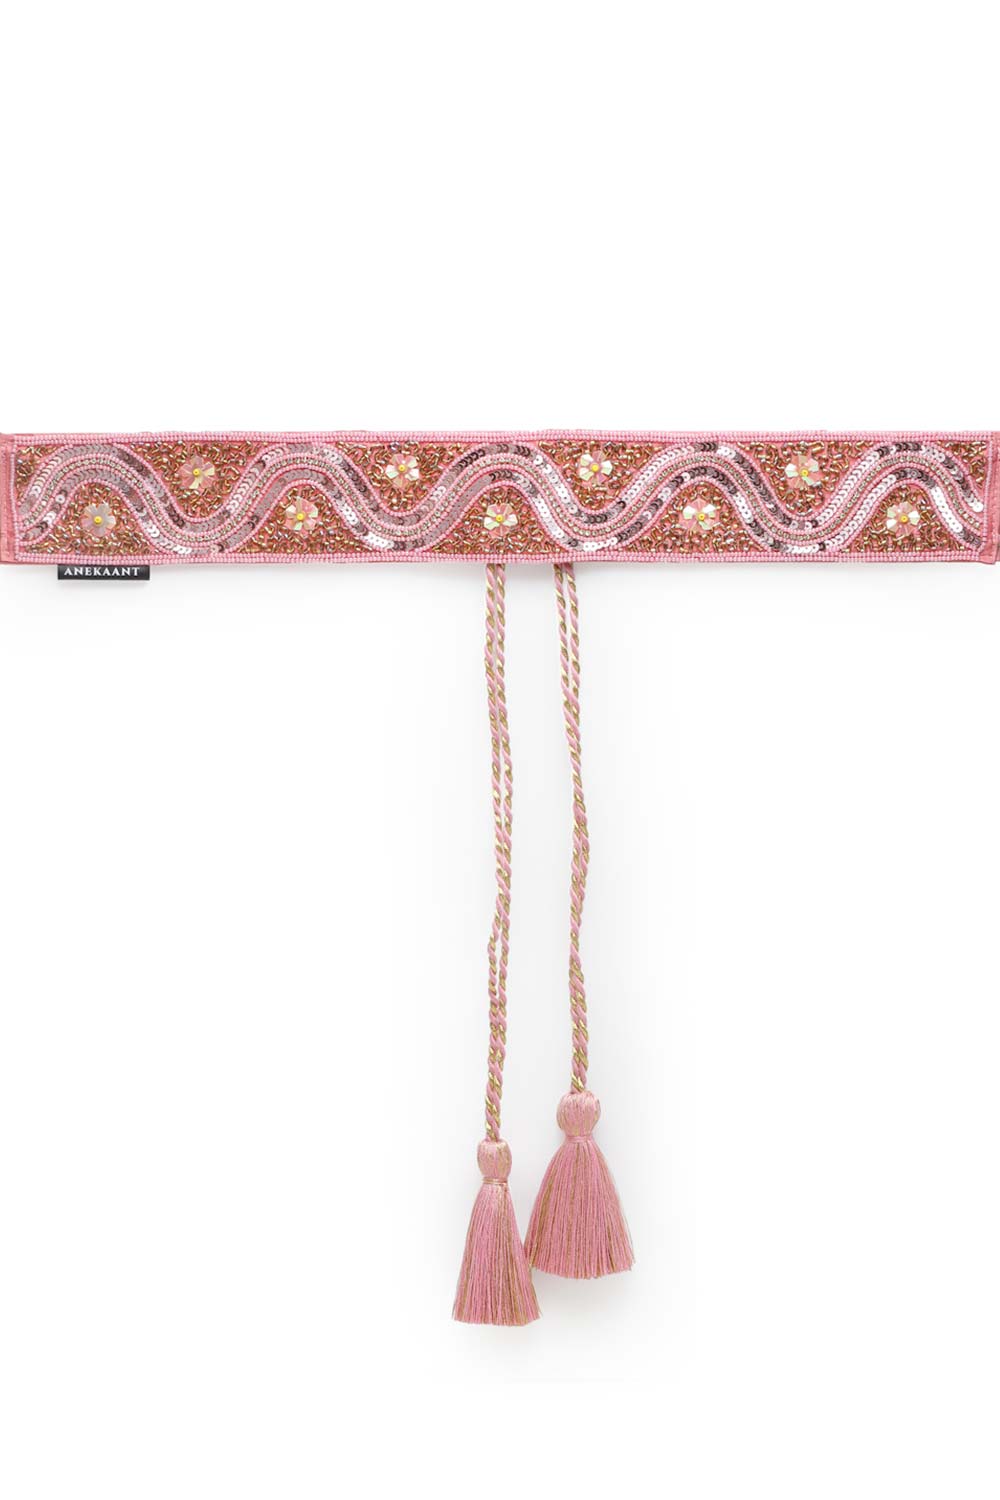 Buy Floral Sequins Work Saree Waist Belt in Pink & Gold Online - One Minute Saree